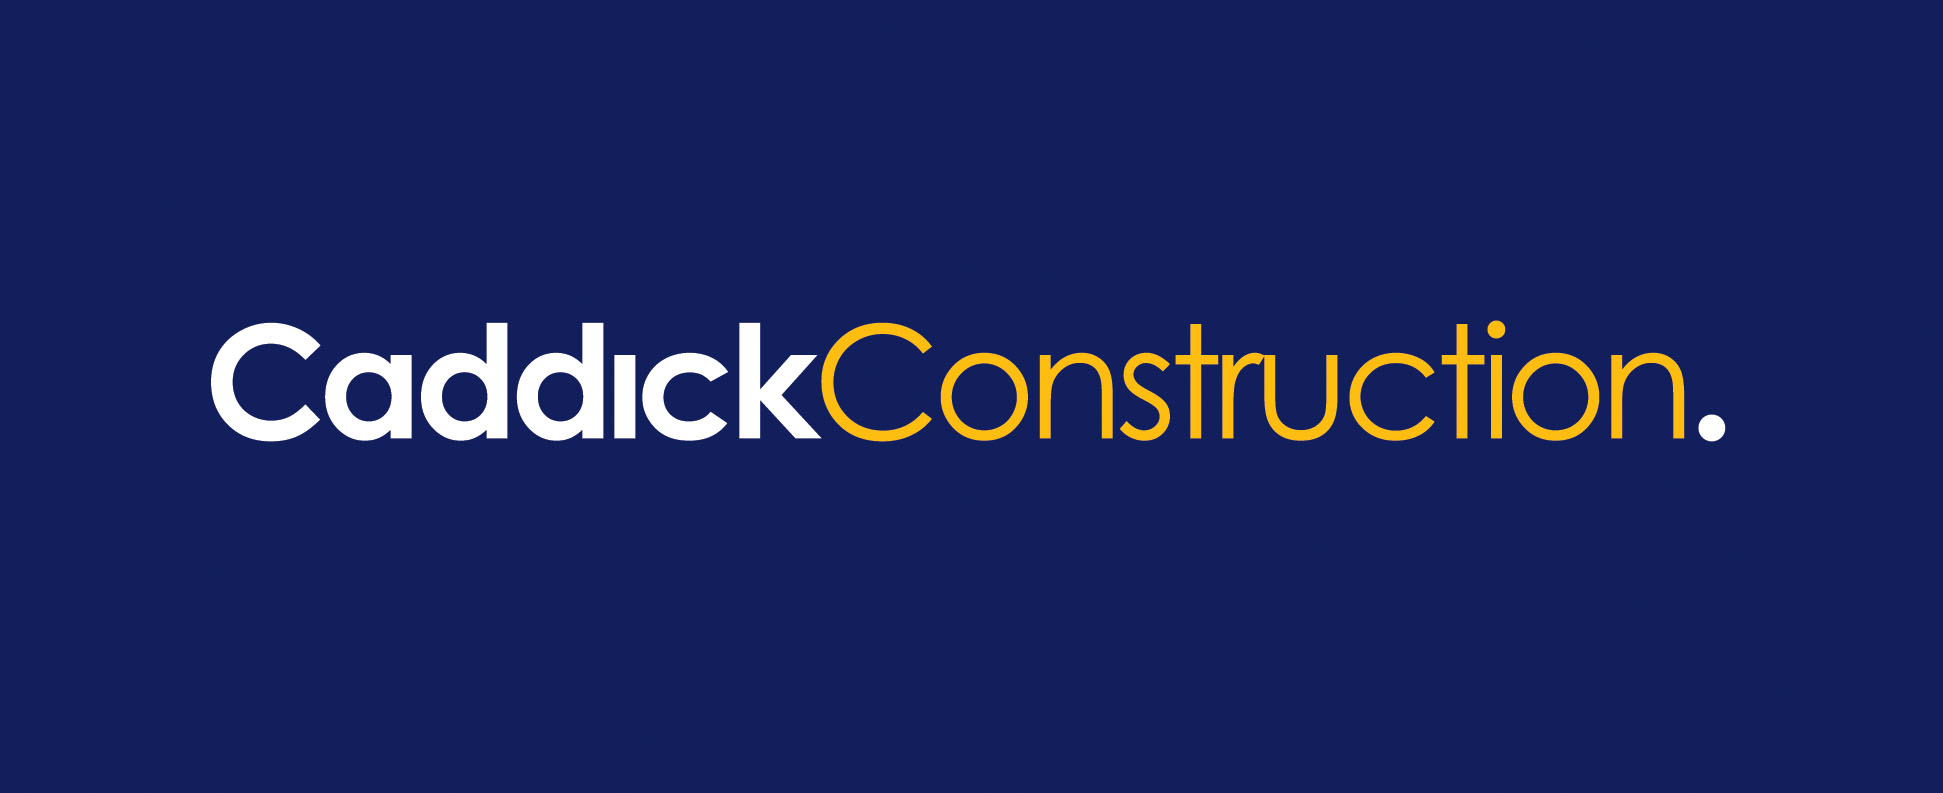 CADDICK CONSTRUCTION - Caddick